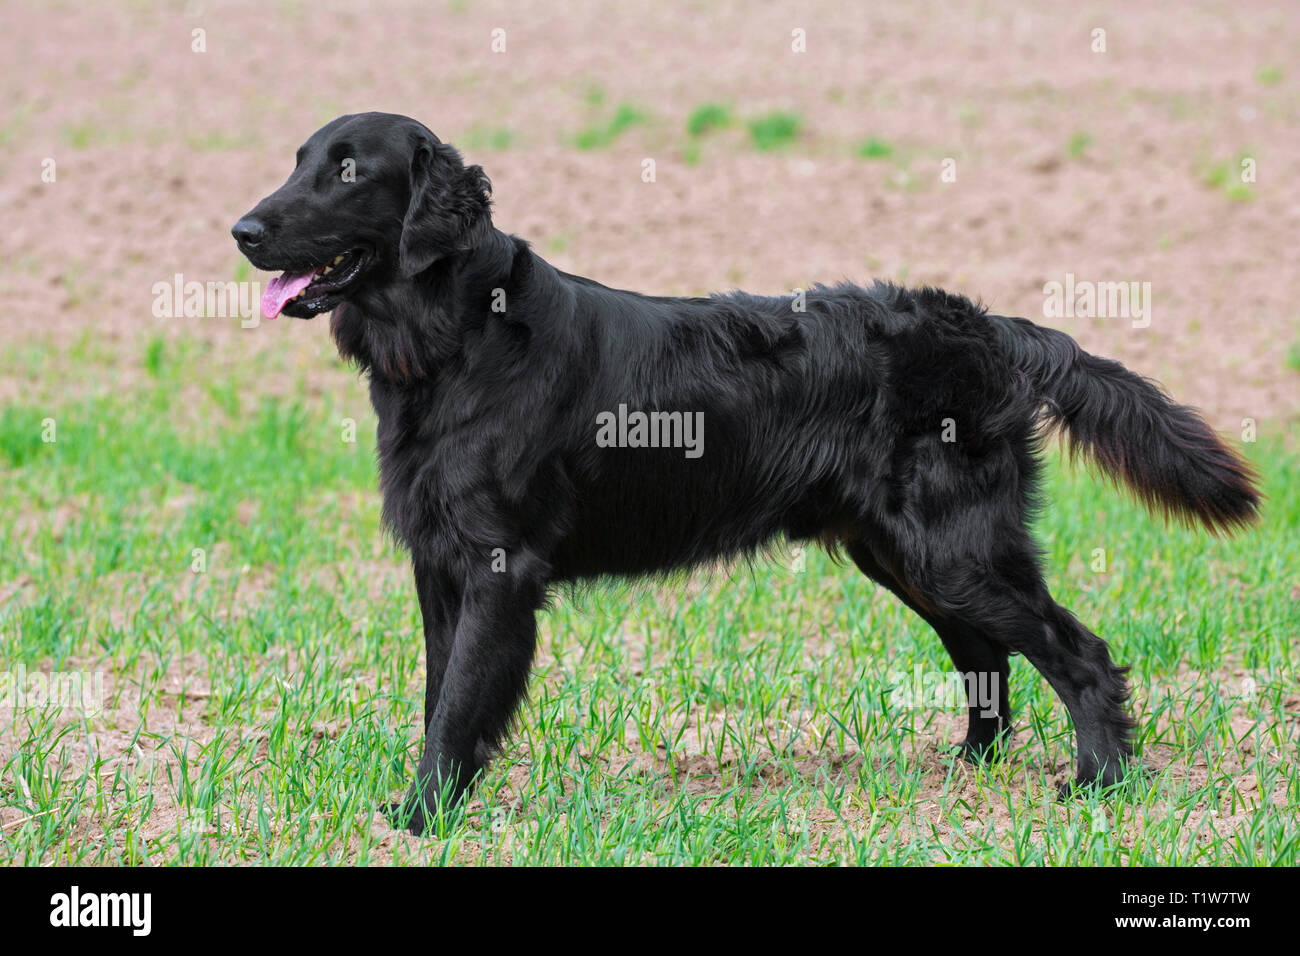 Black flat-coated retriever in field, gundog / gun dog breed originating from the United Kingdom Stock Photo